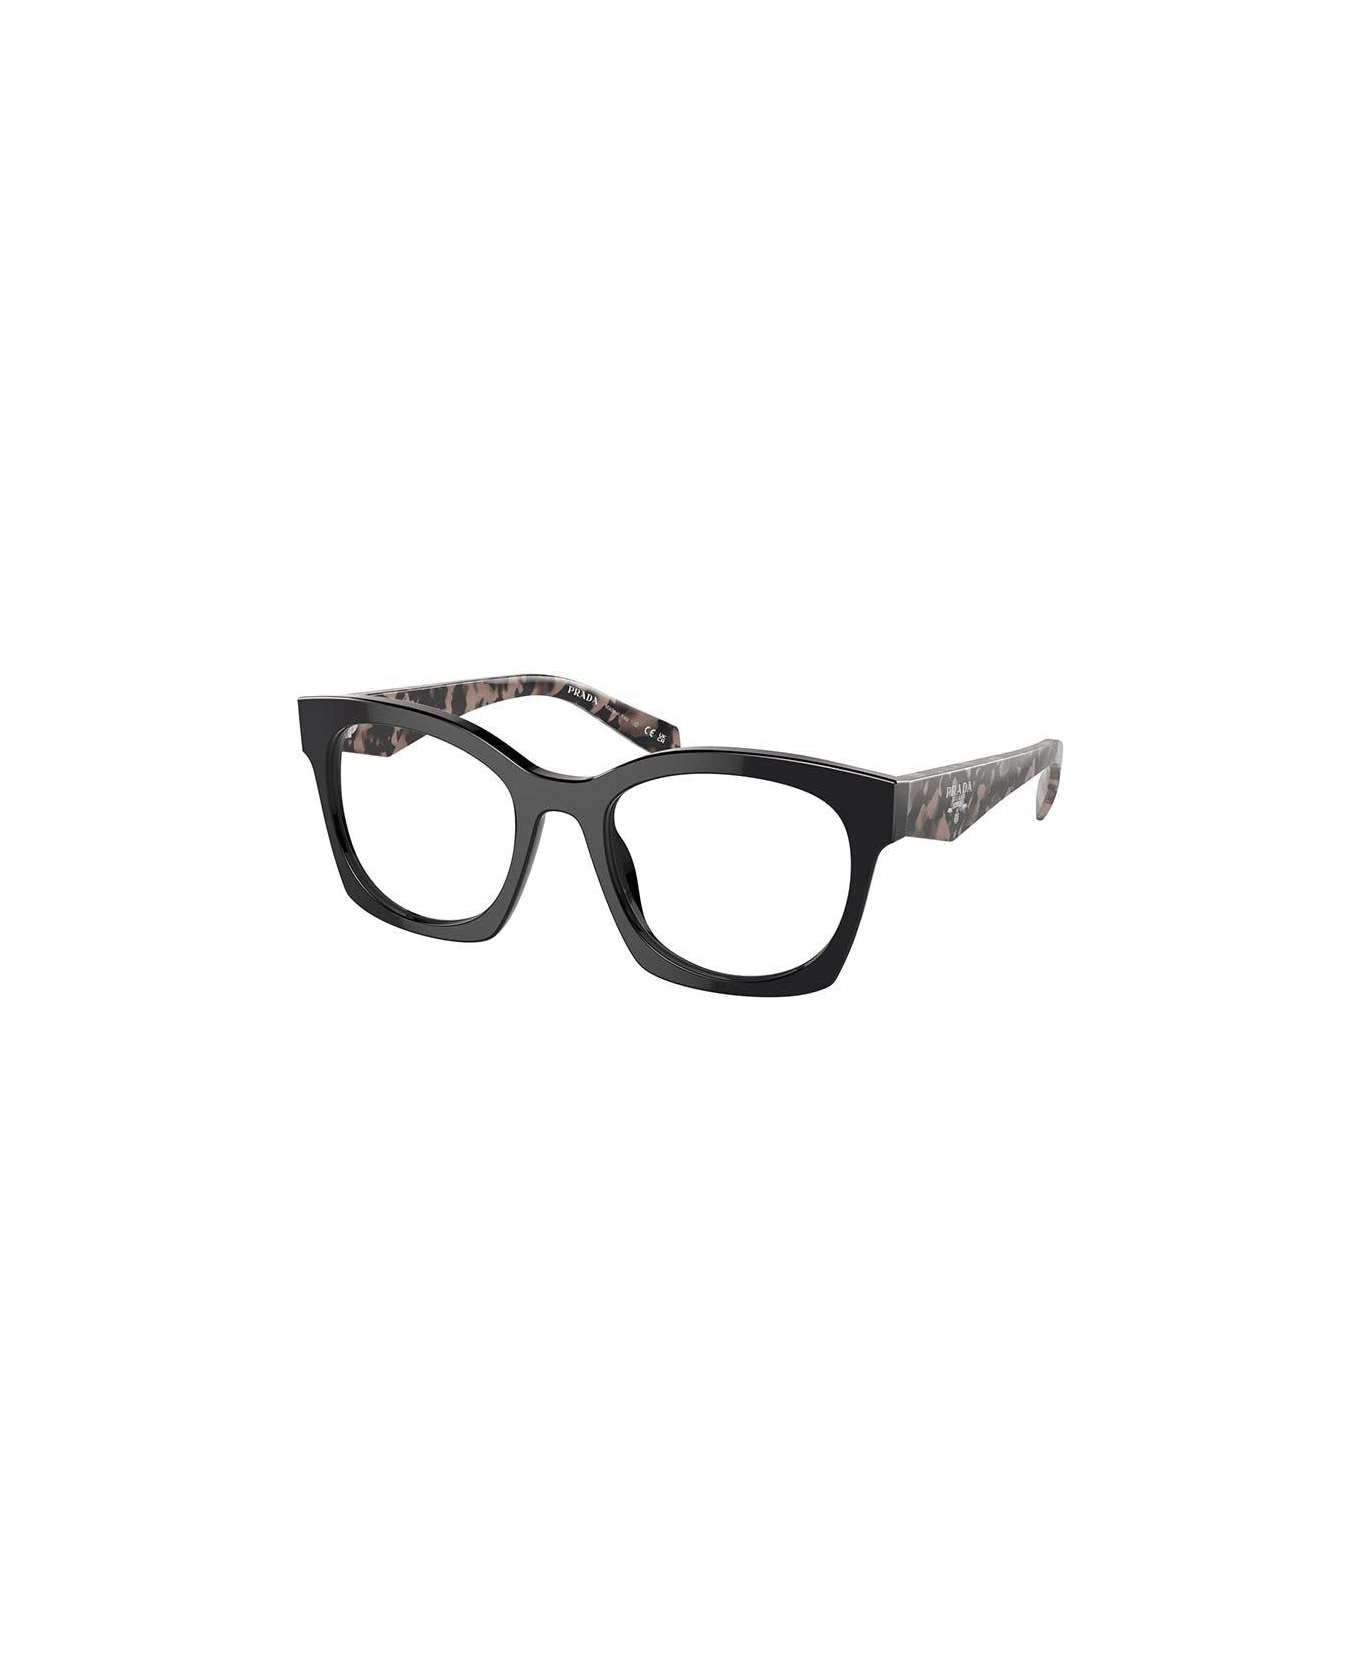 Prada Eyewear D-frame Glasses - 13P1O1 アイウェア